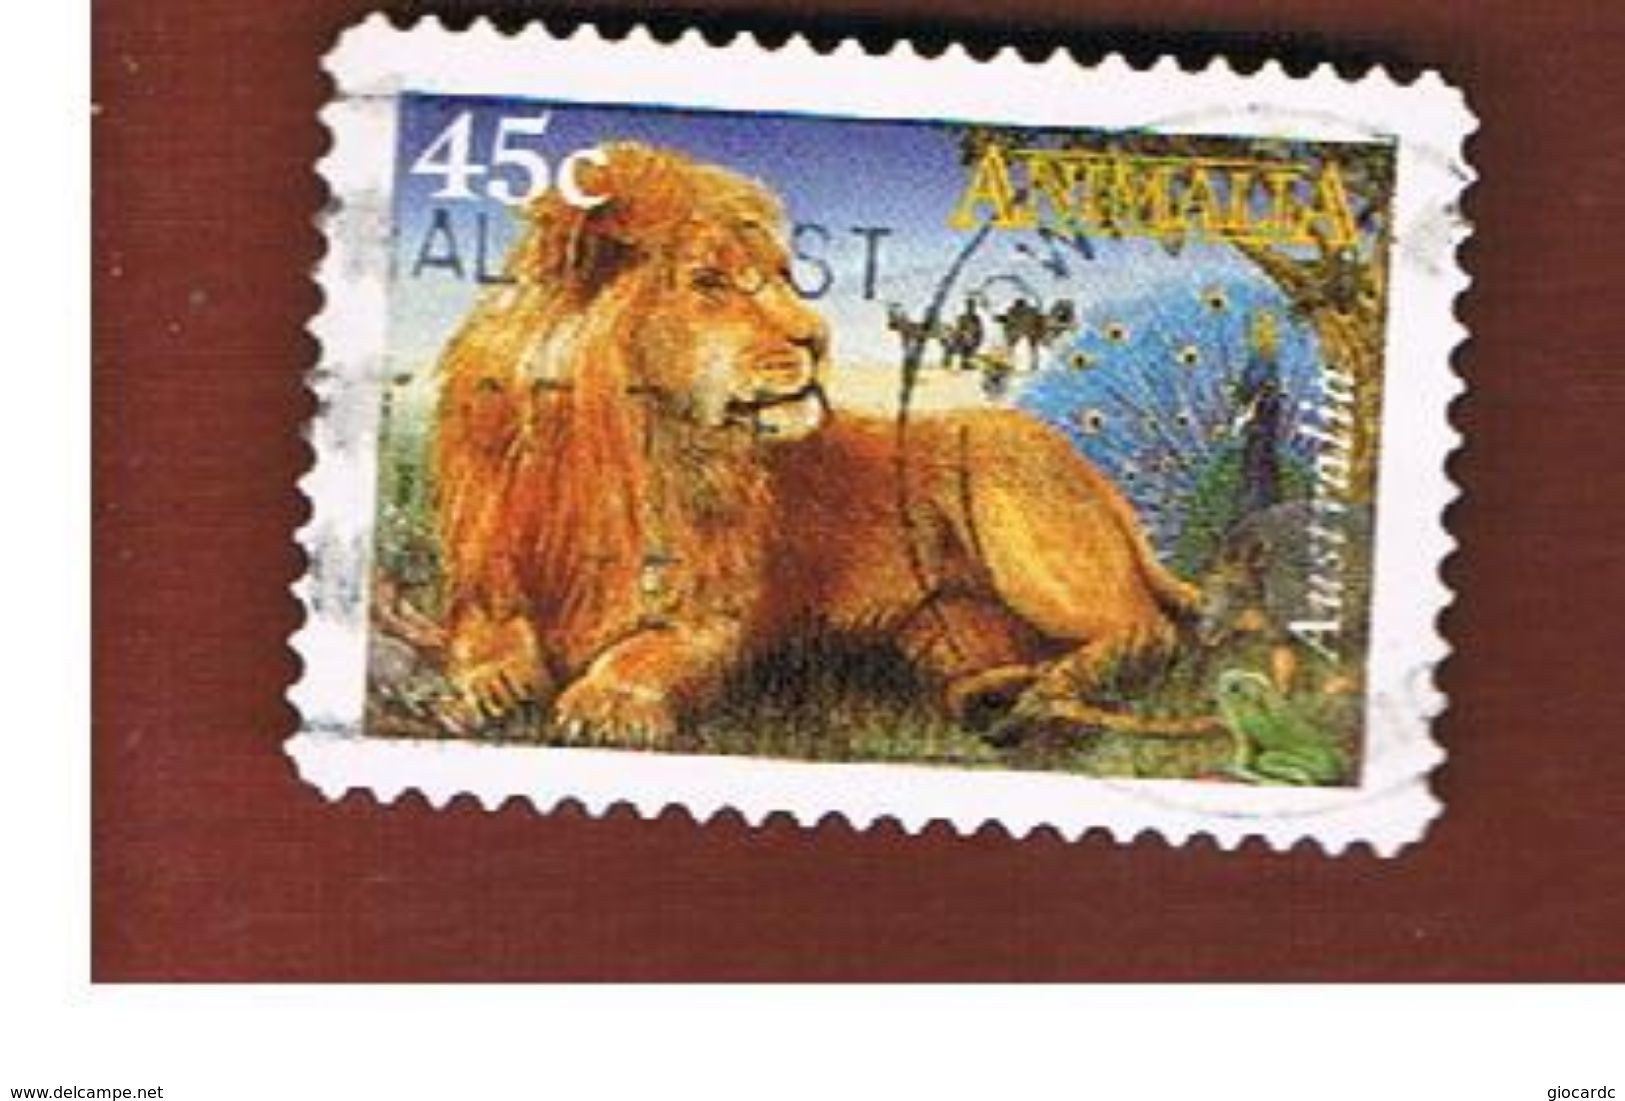 AUSTRALIA  -  SG 1634 -      1996  BOOKS FOR CHILDREN: ANIMALIA         -       USED - Used Stamps